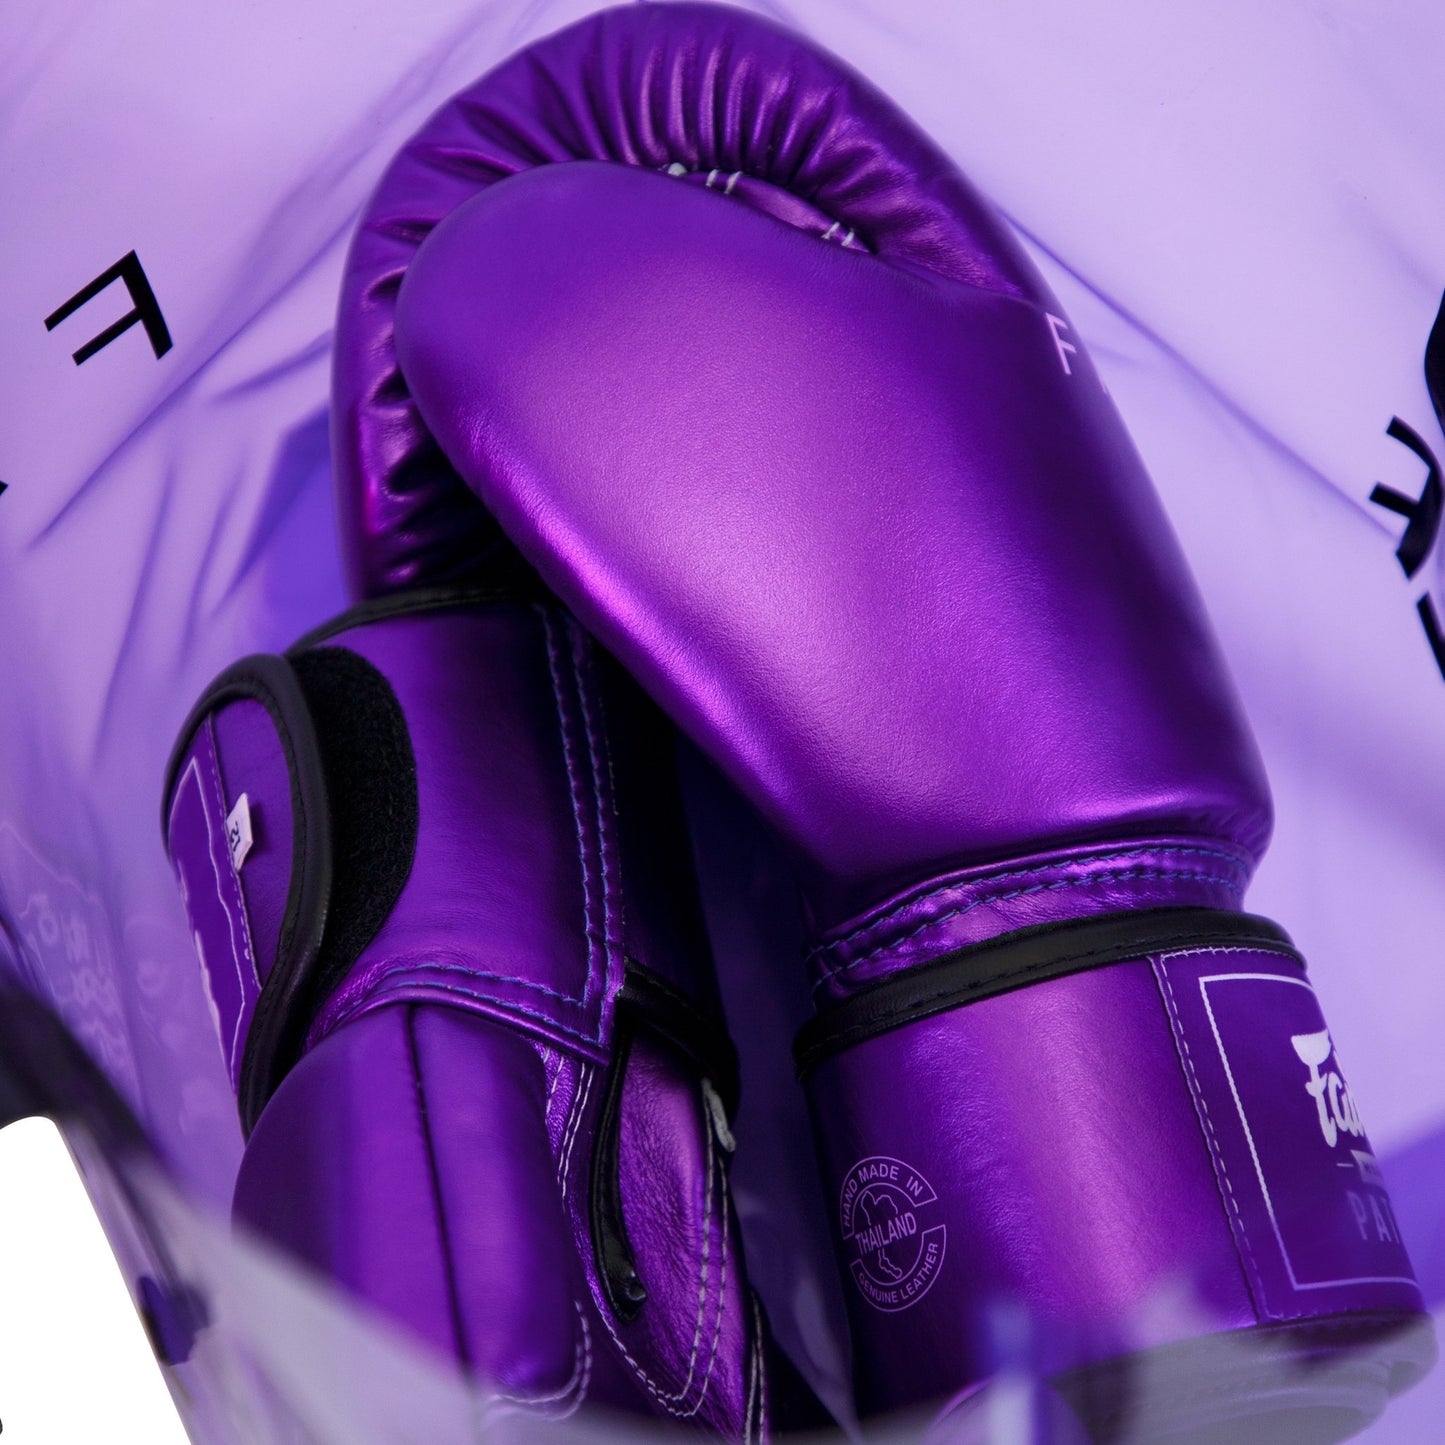 Fairtex BGV22 Metallic Purple Boxing Gloves - Nak Muay Training - Muay tHAI